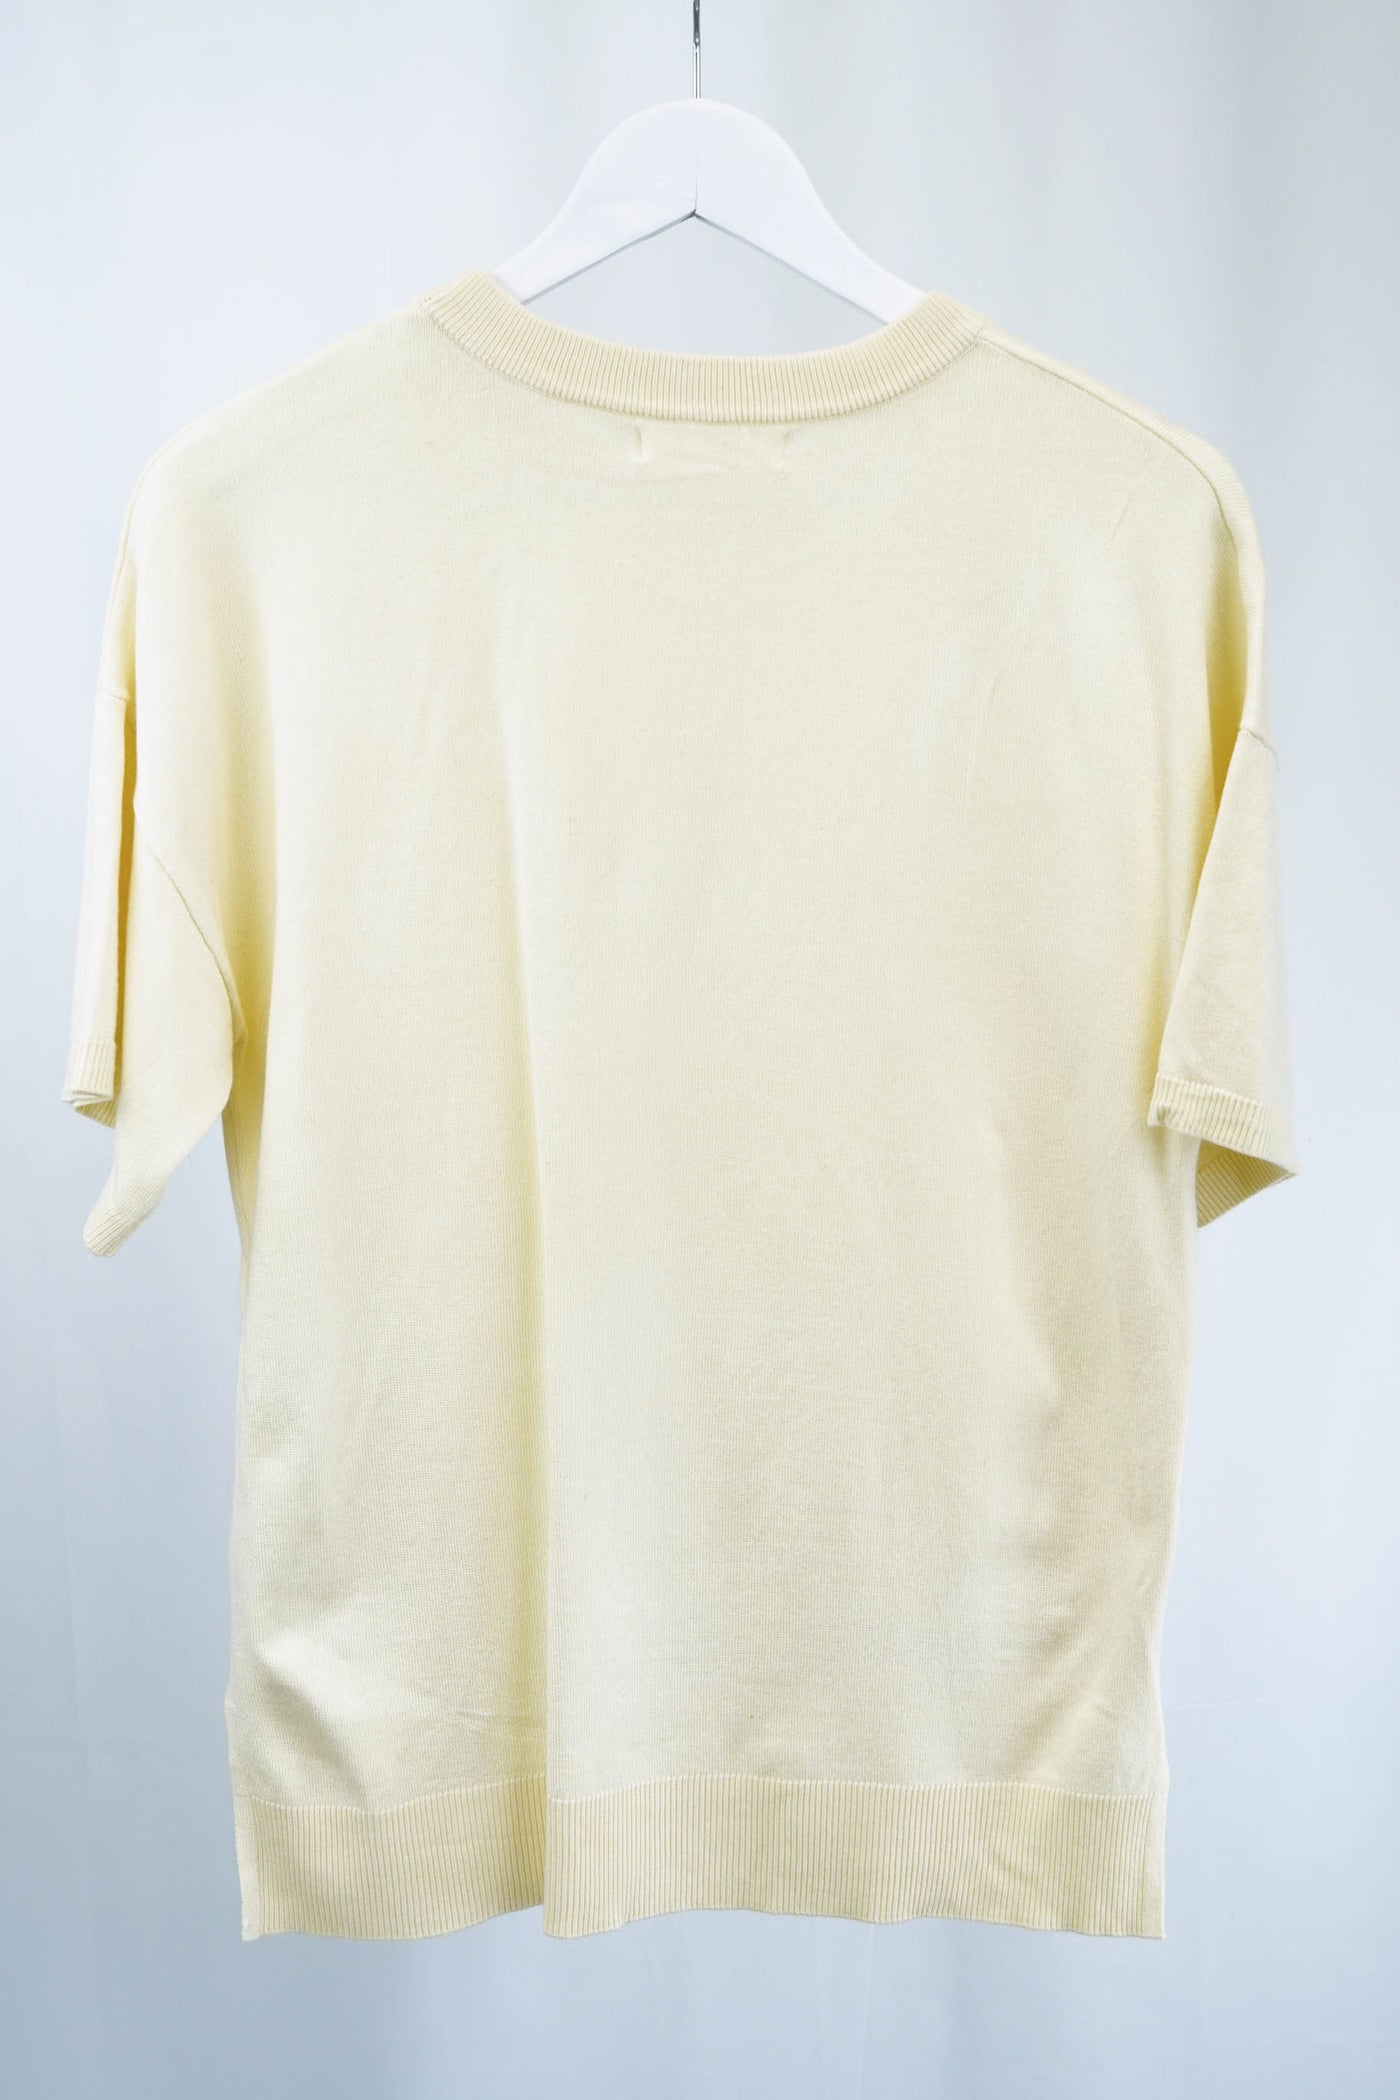 Camiseta tejido invierno manga corta amarilla